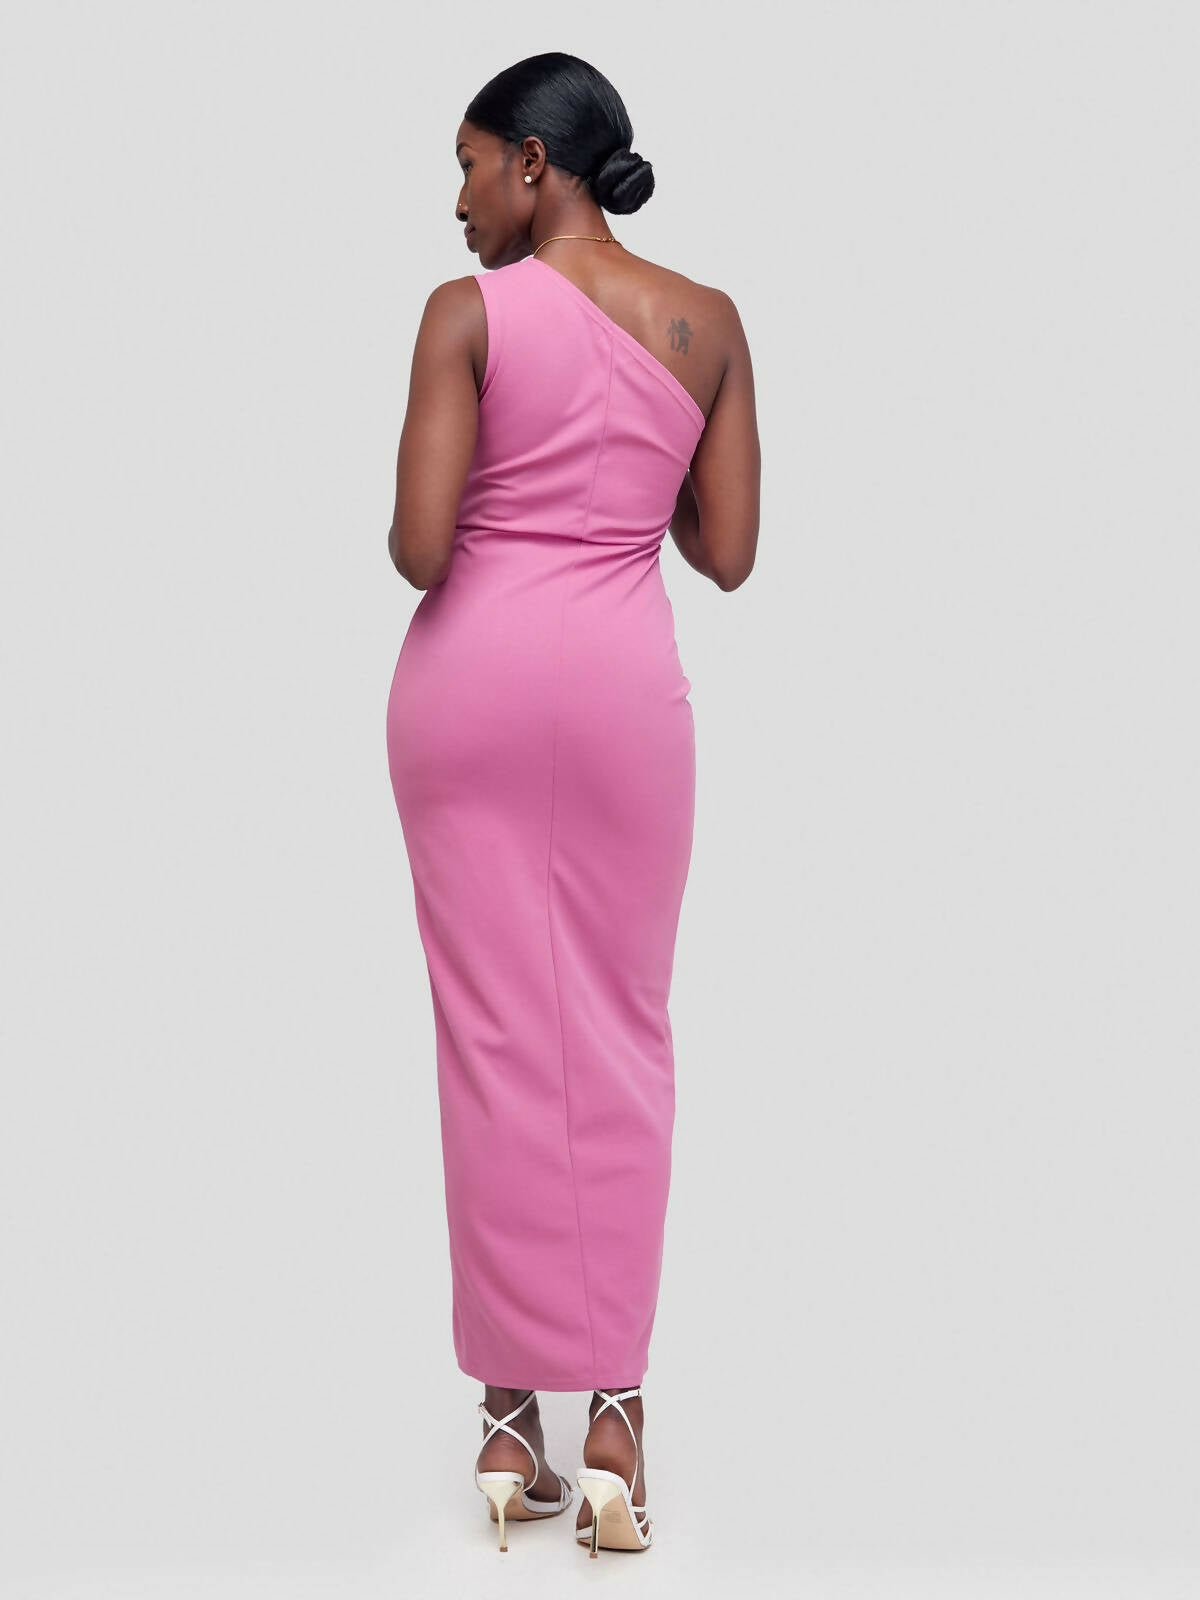 Jem Africa Katumbi Maxi Dress - Lilac - Shopzetu